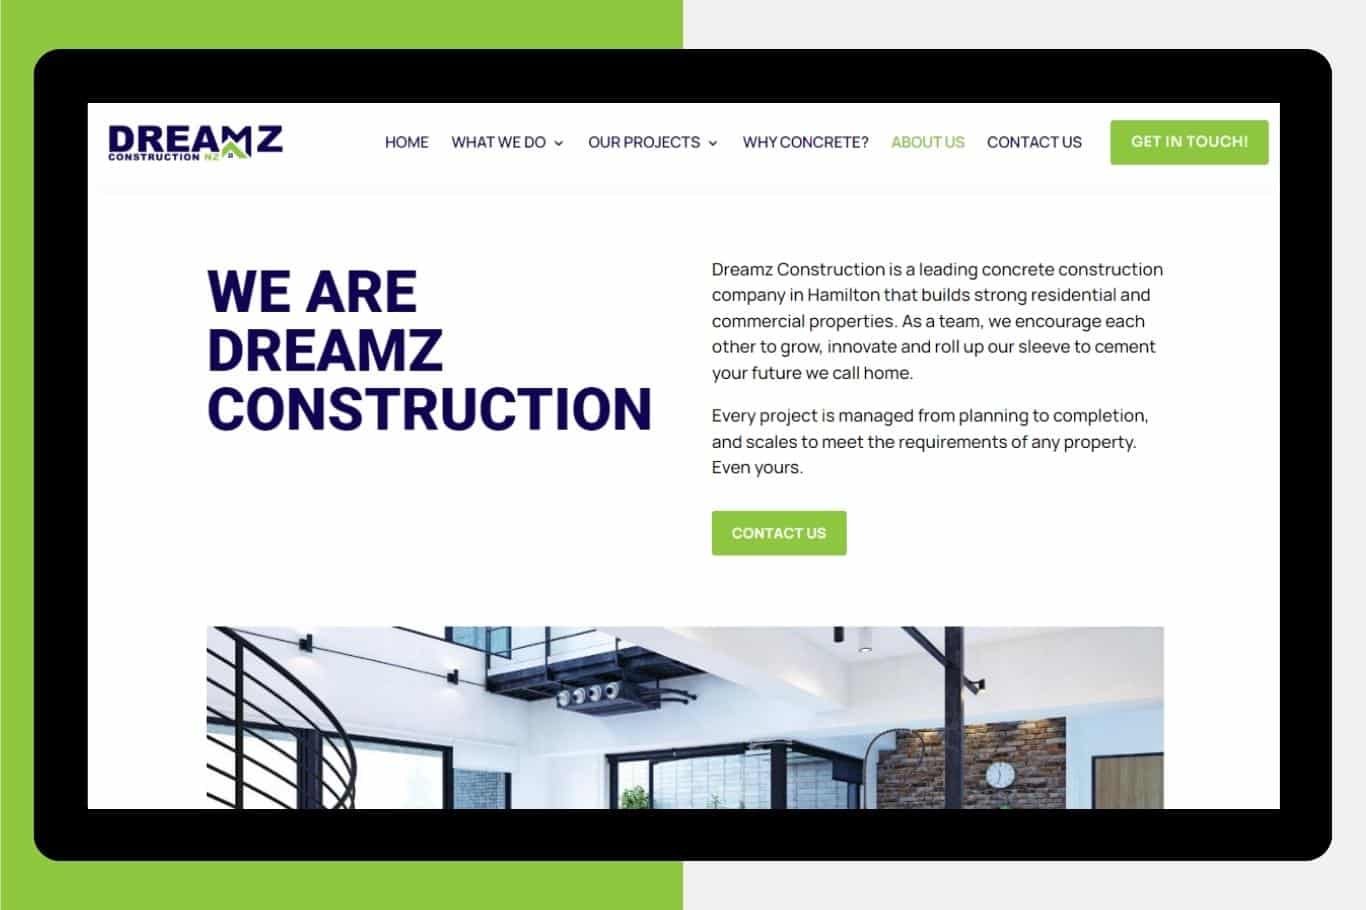 dreamz-construction-mobile-responsive-website-development-cloud-media